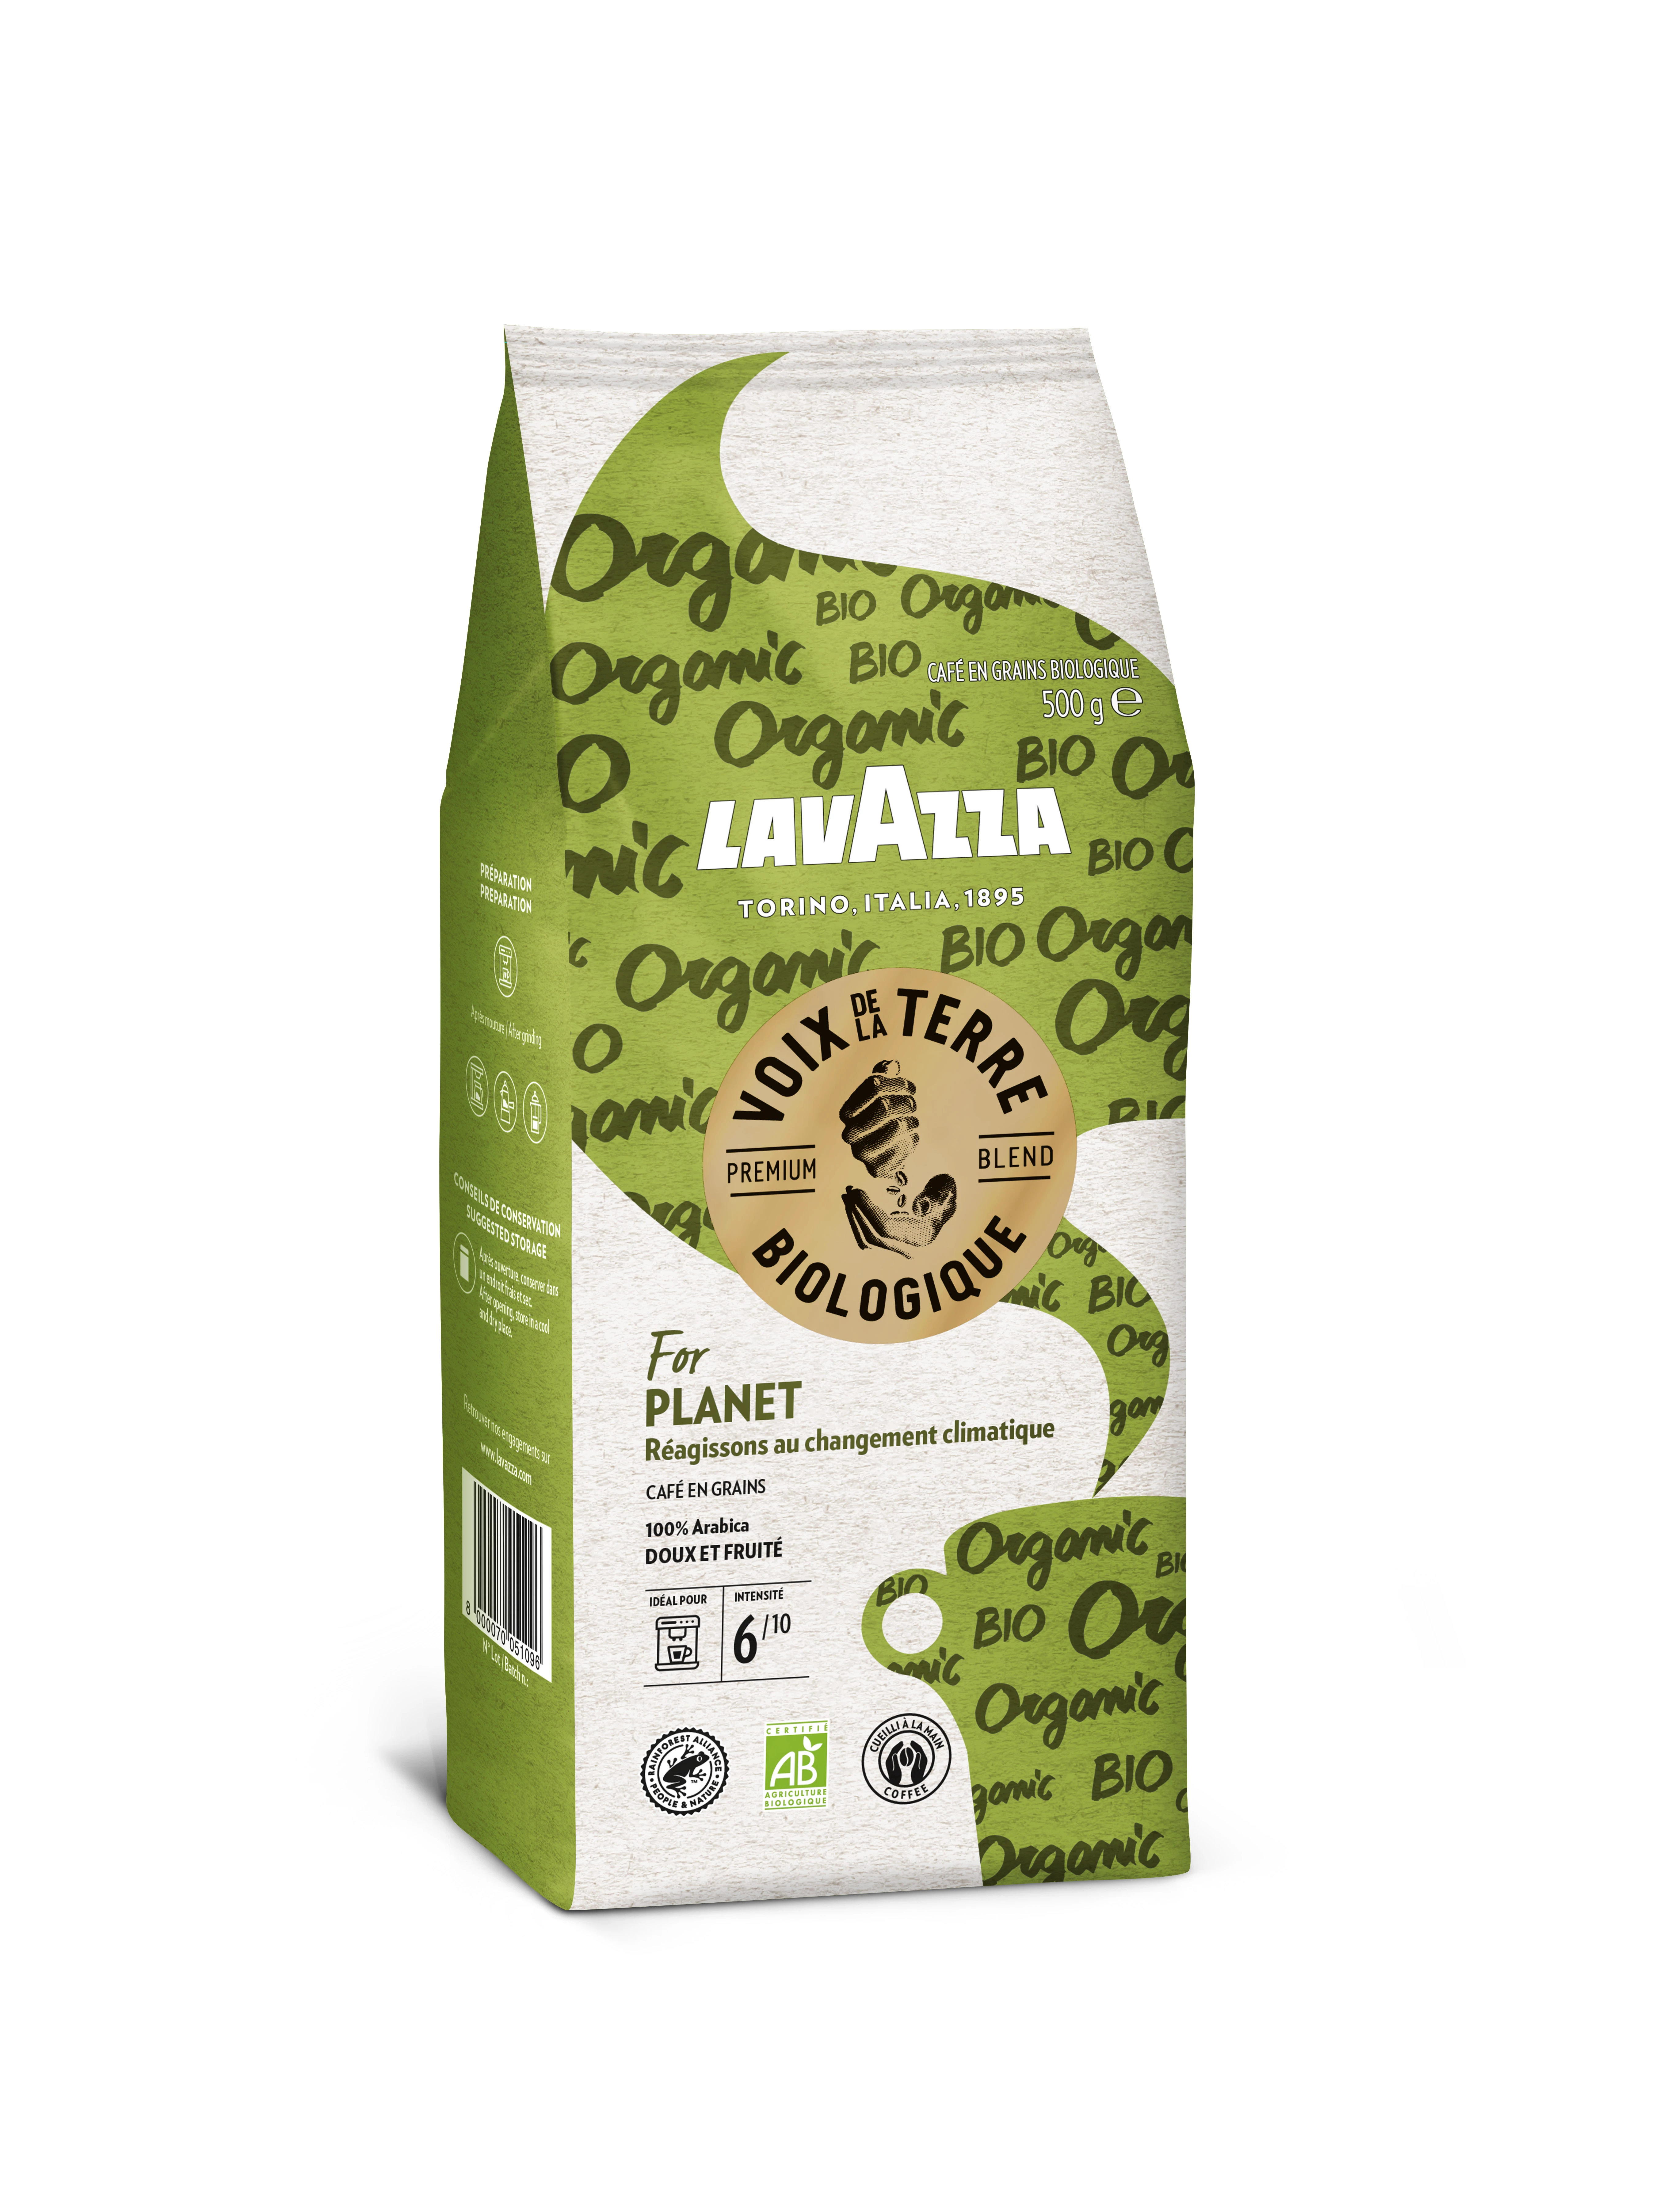 Organic Planet Coffee Bean 500g - LAVAZZA